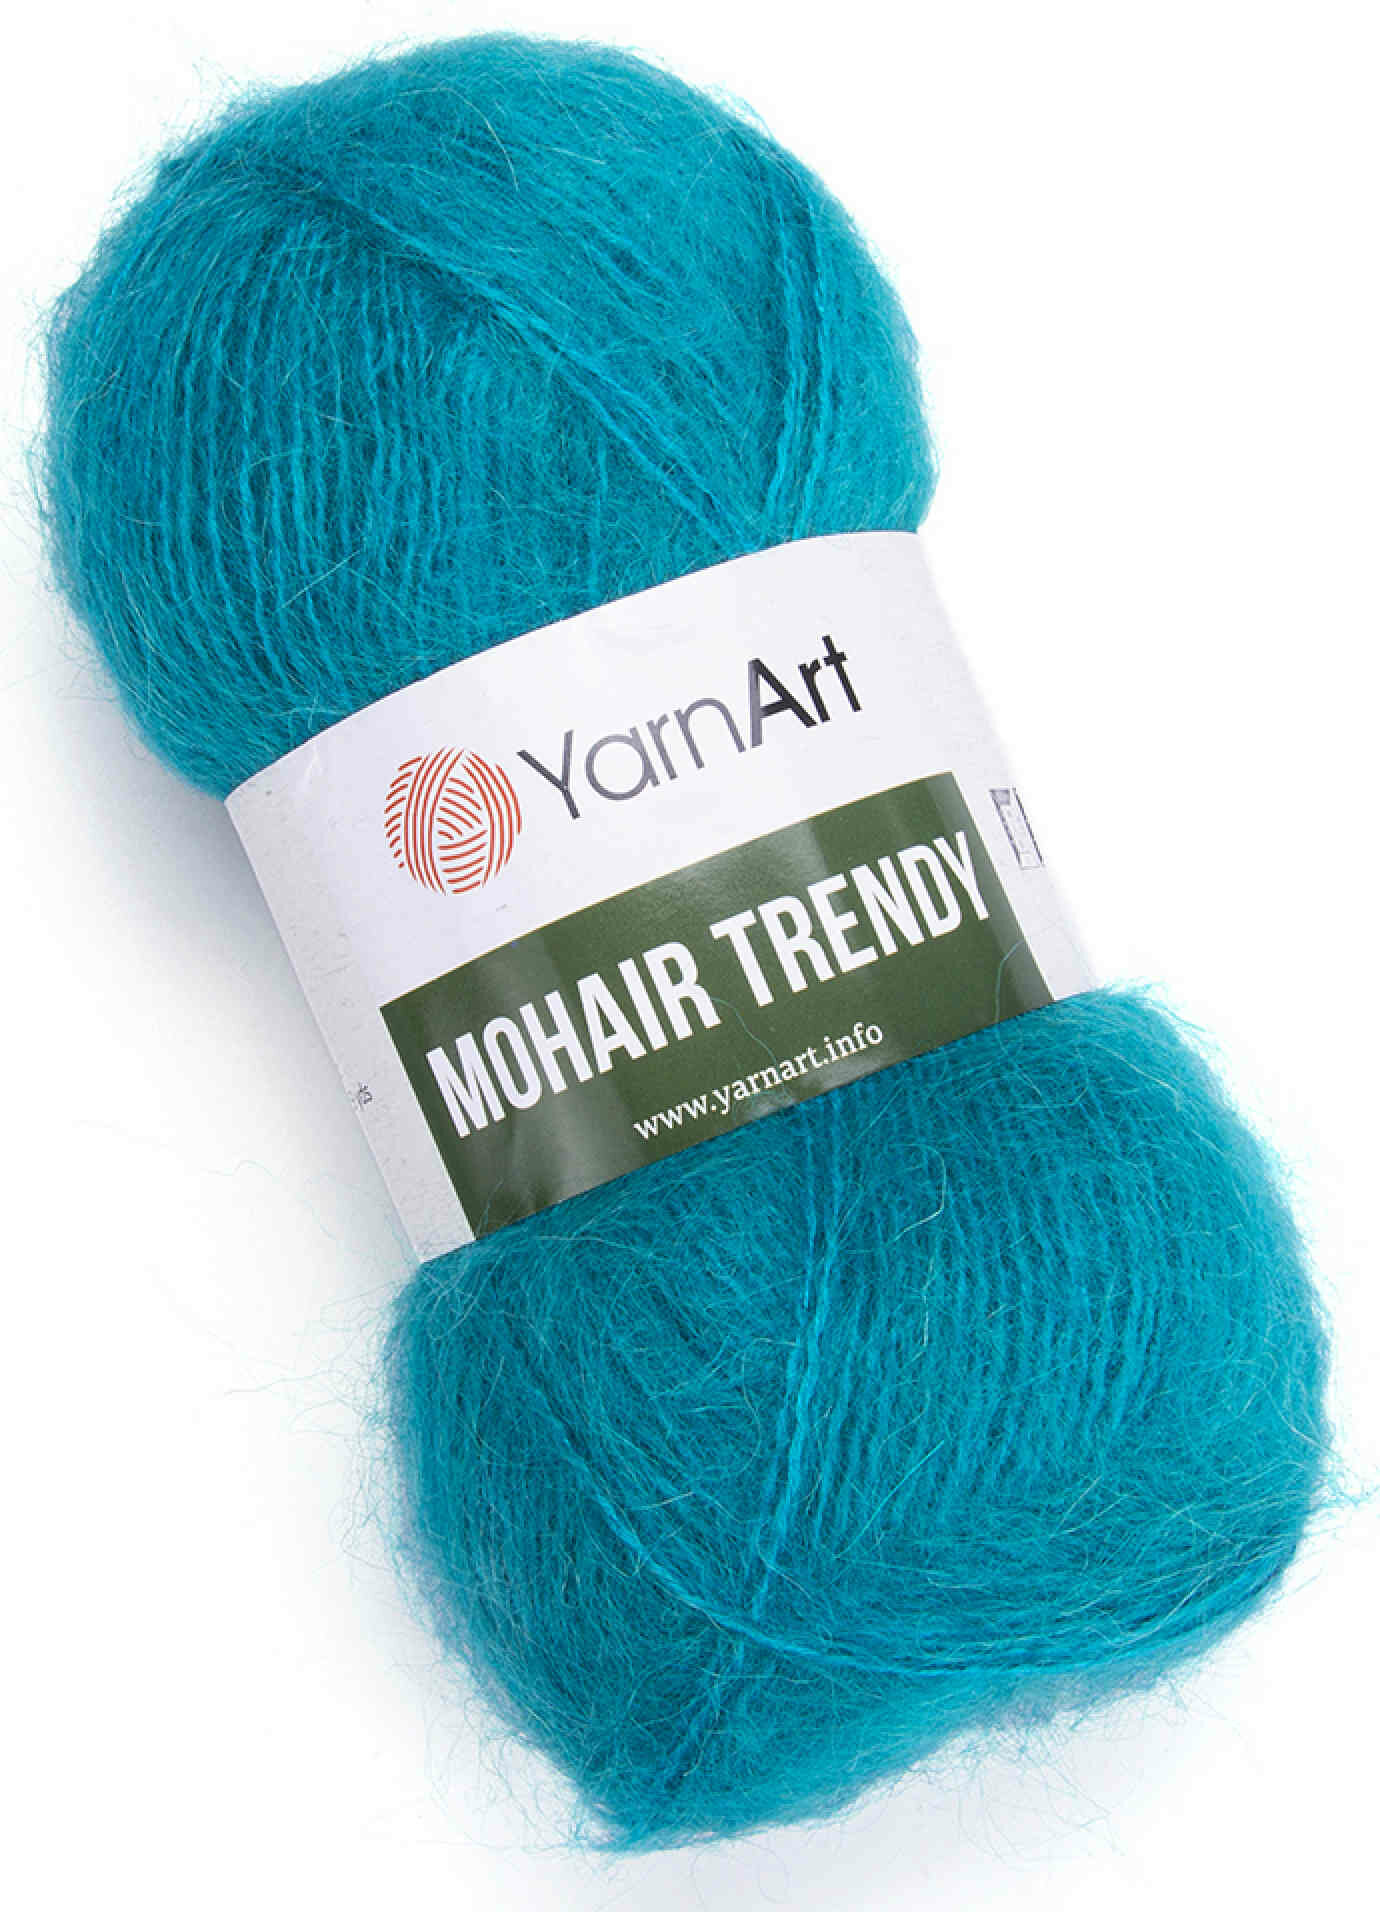 Пряжа Yarnart Mohair Trendy голубая бирюза (106), 50%мохер/50%акрил, 220м, 100г, 1шт